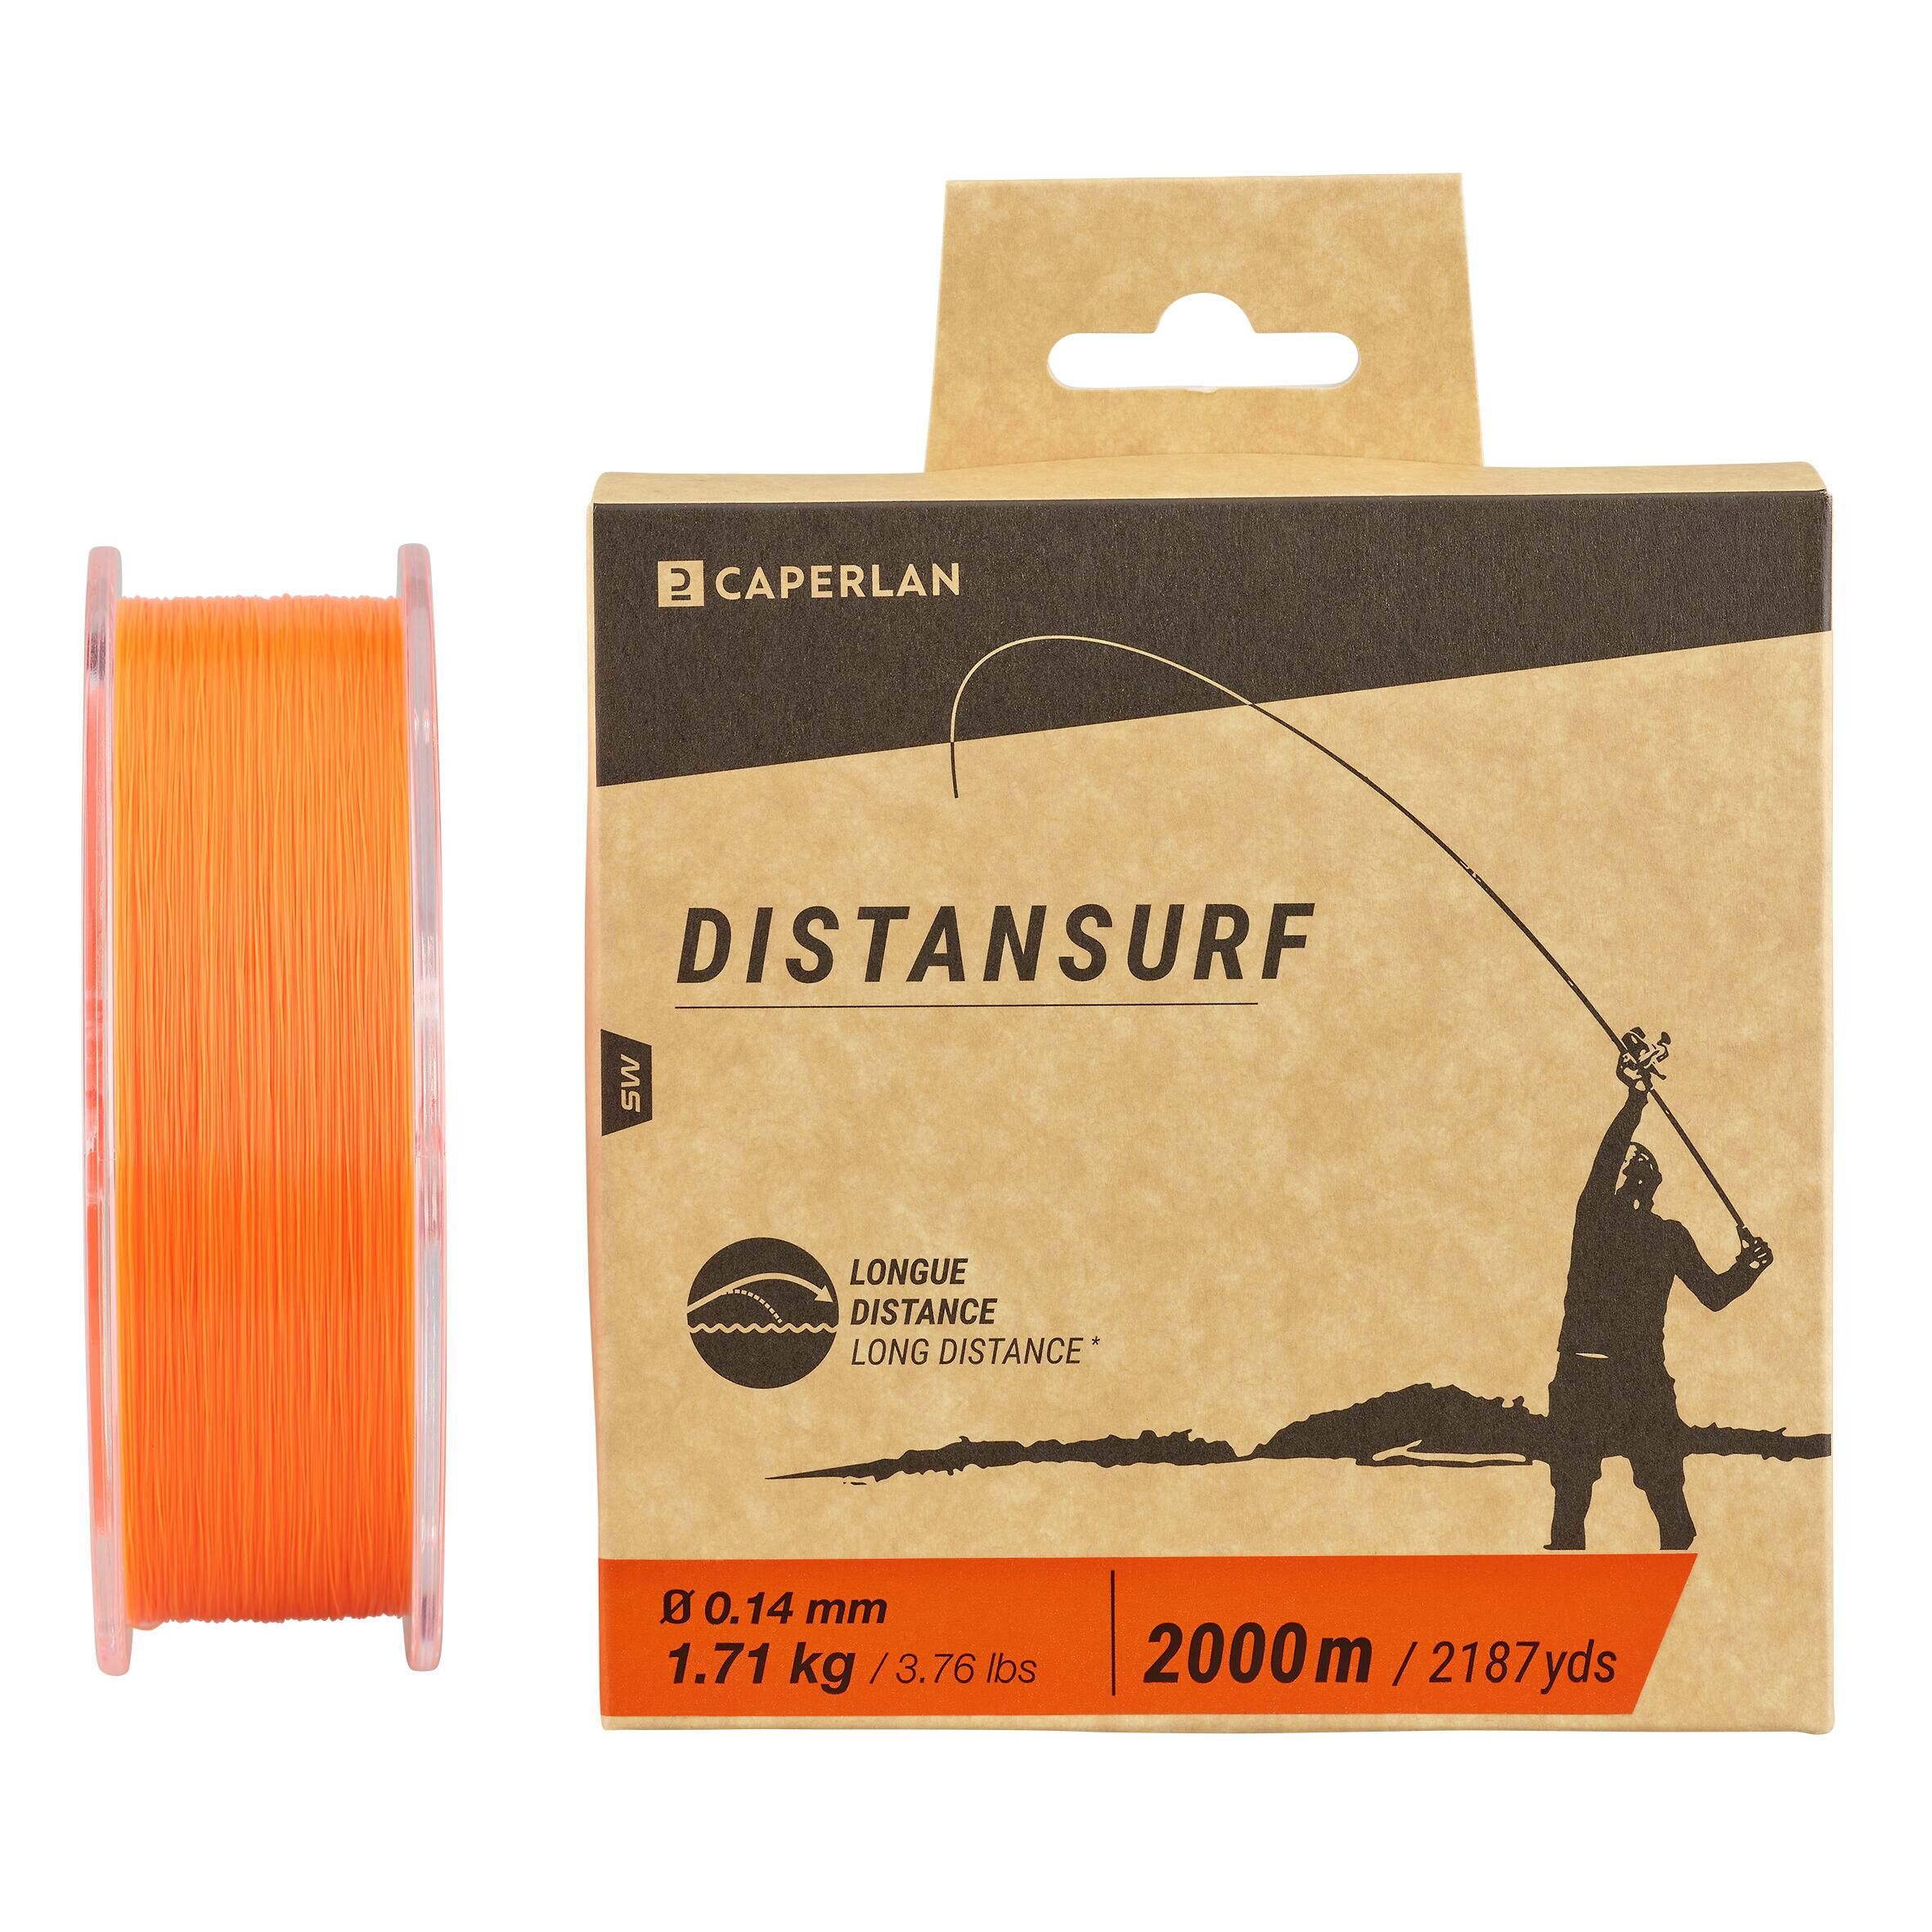 CAPERLAN Surfcasting fishing line DISTANSURF 14/100 - Orange